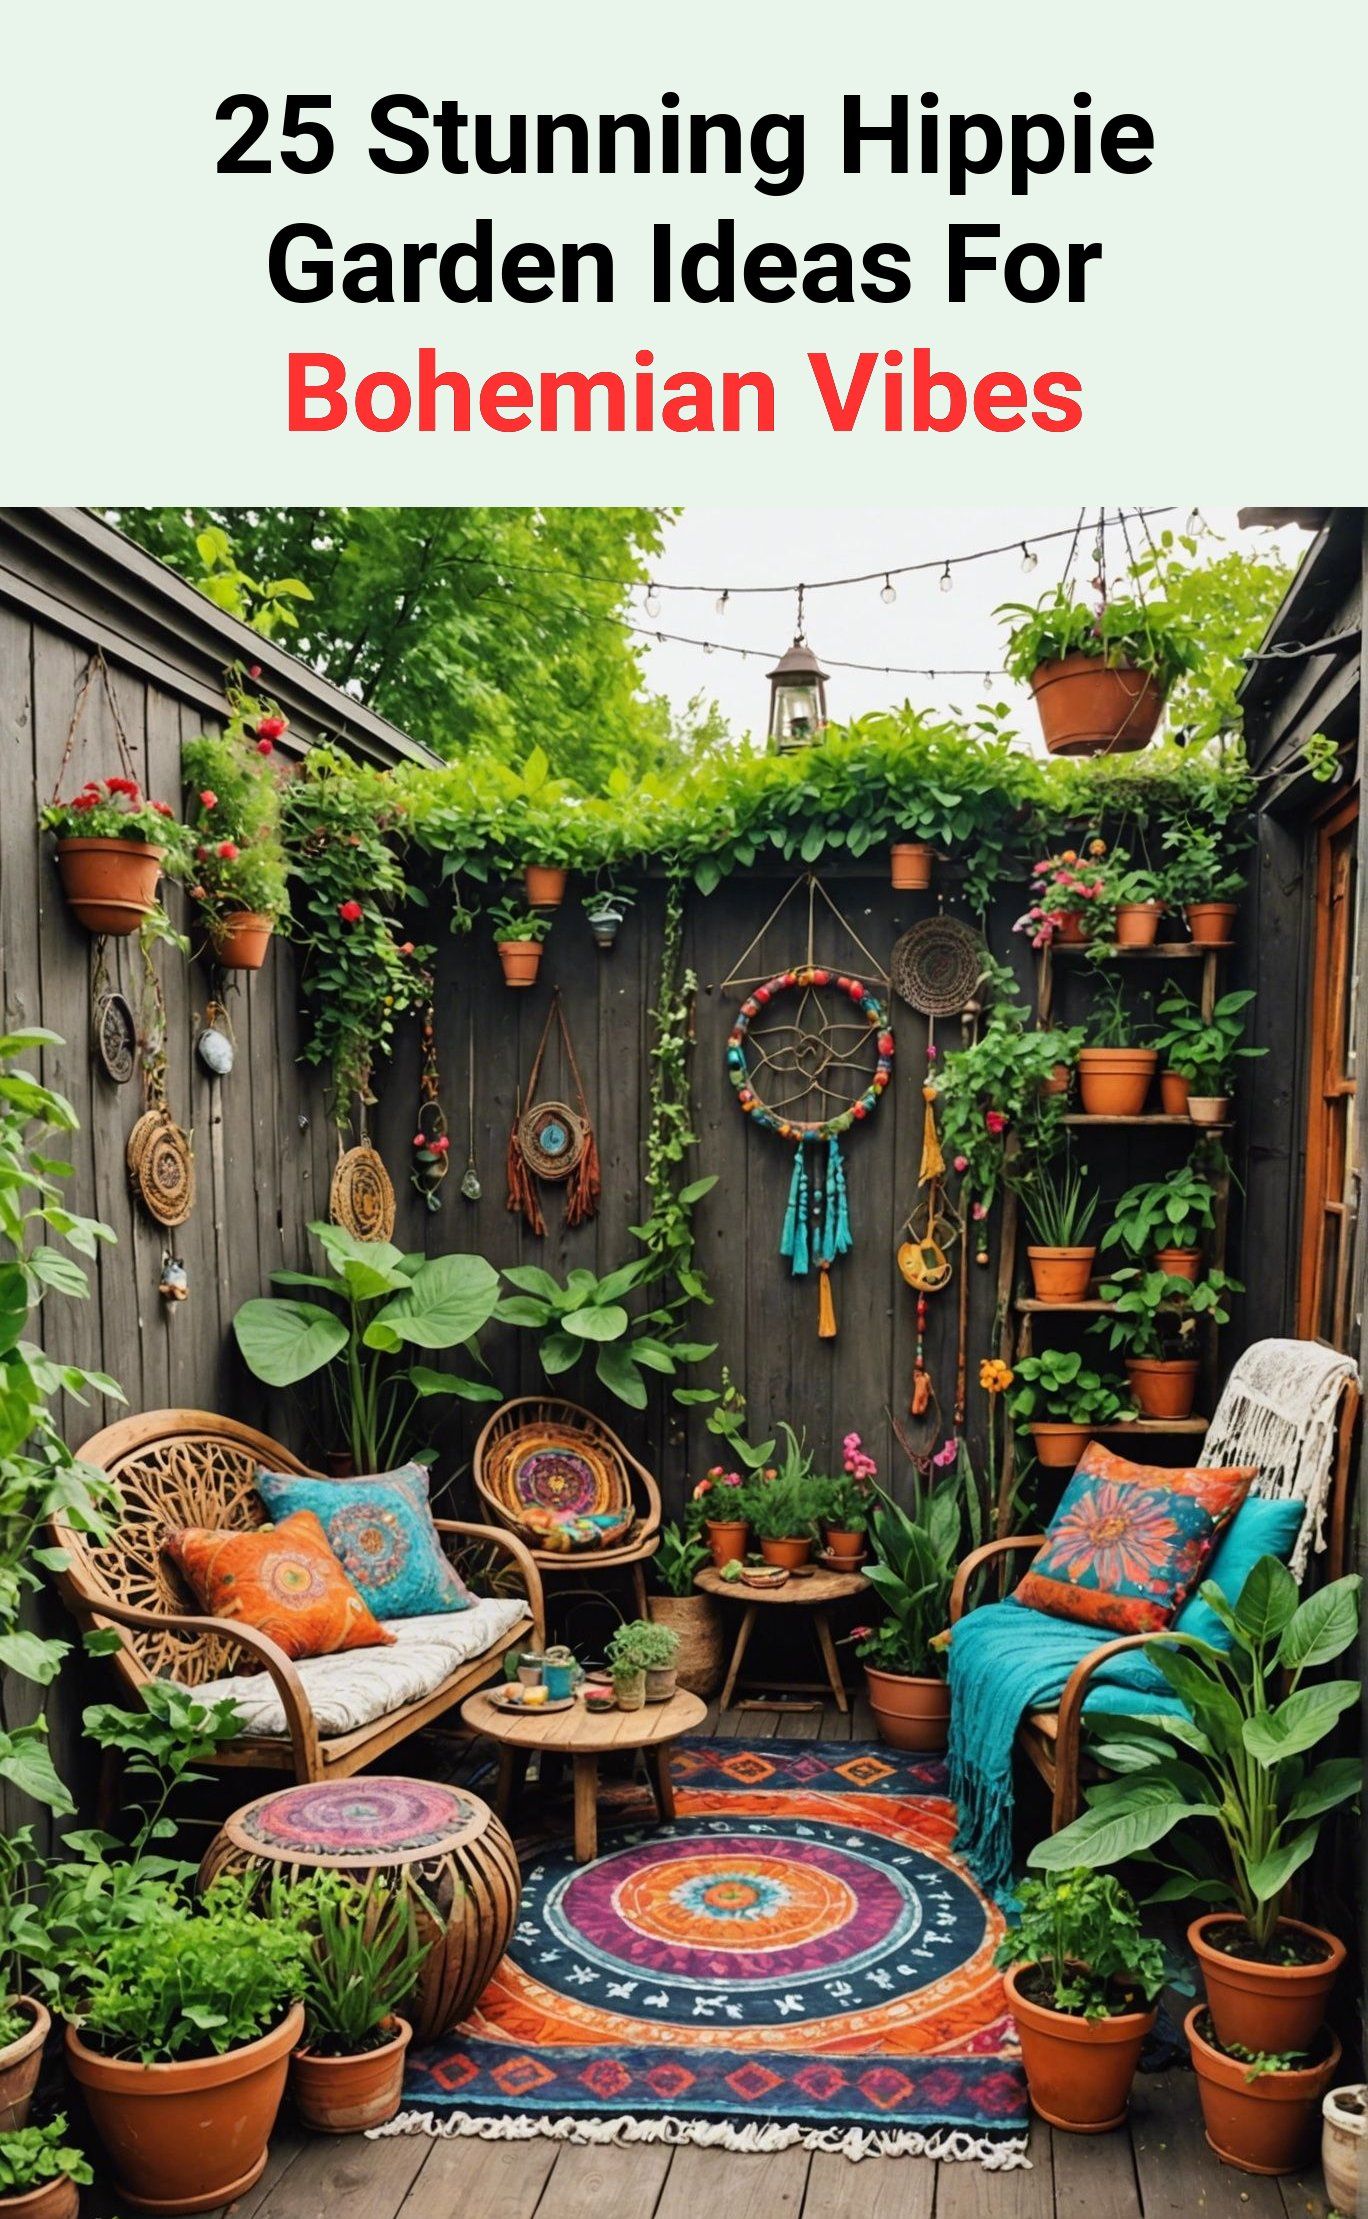 25 Stunning Hippie Garden Ideas For Bohemian Vibes